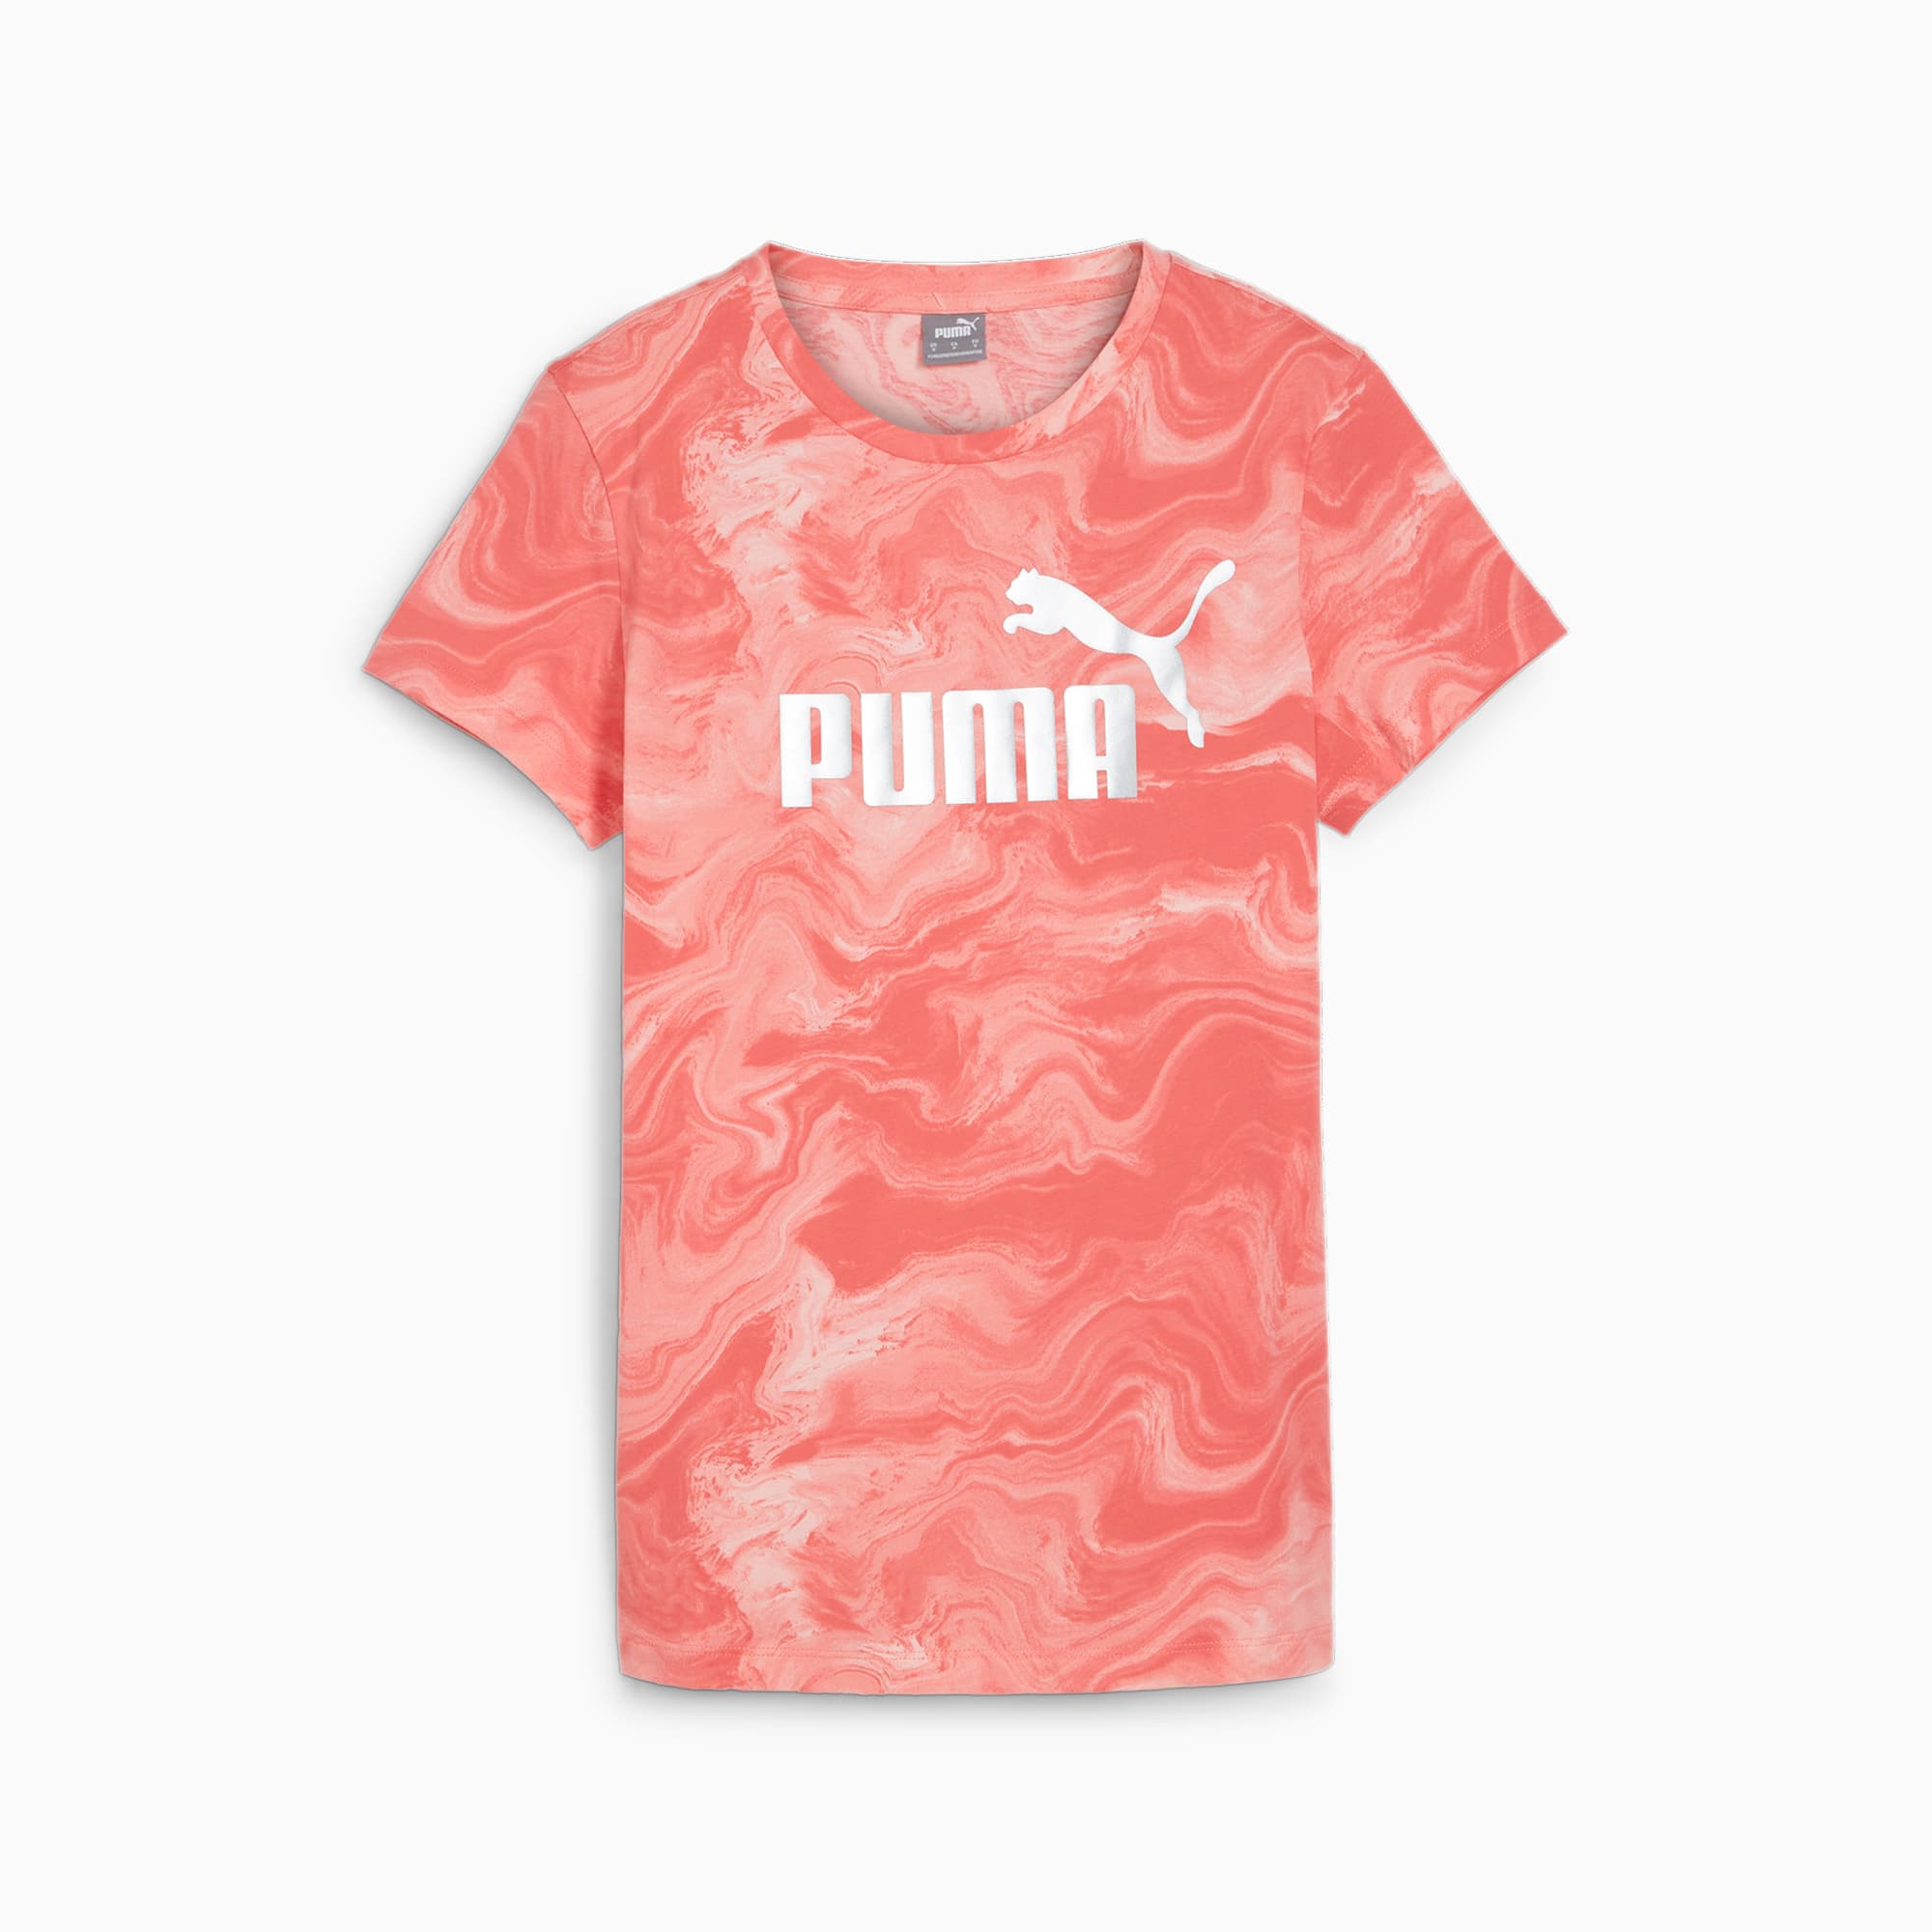 PUMA Ess+ Marbleized Women's T-Shirt, Peach Smoothie, Size S, Clothing